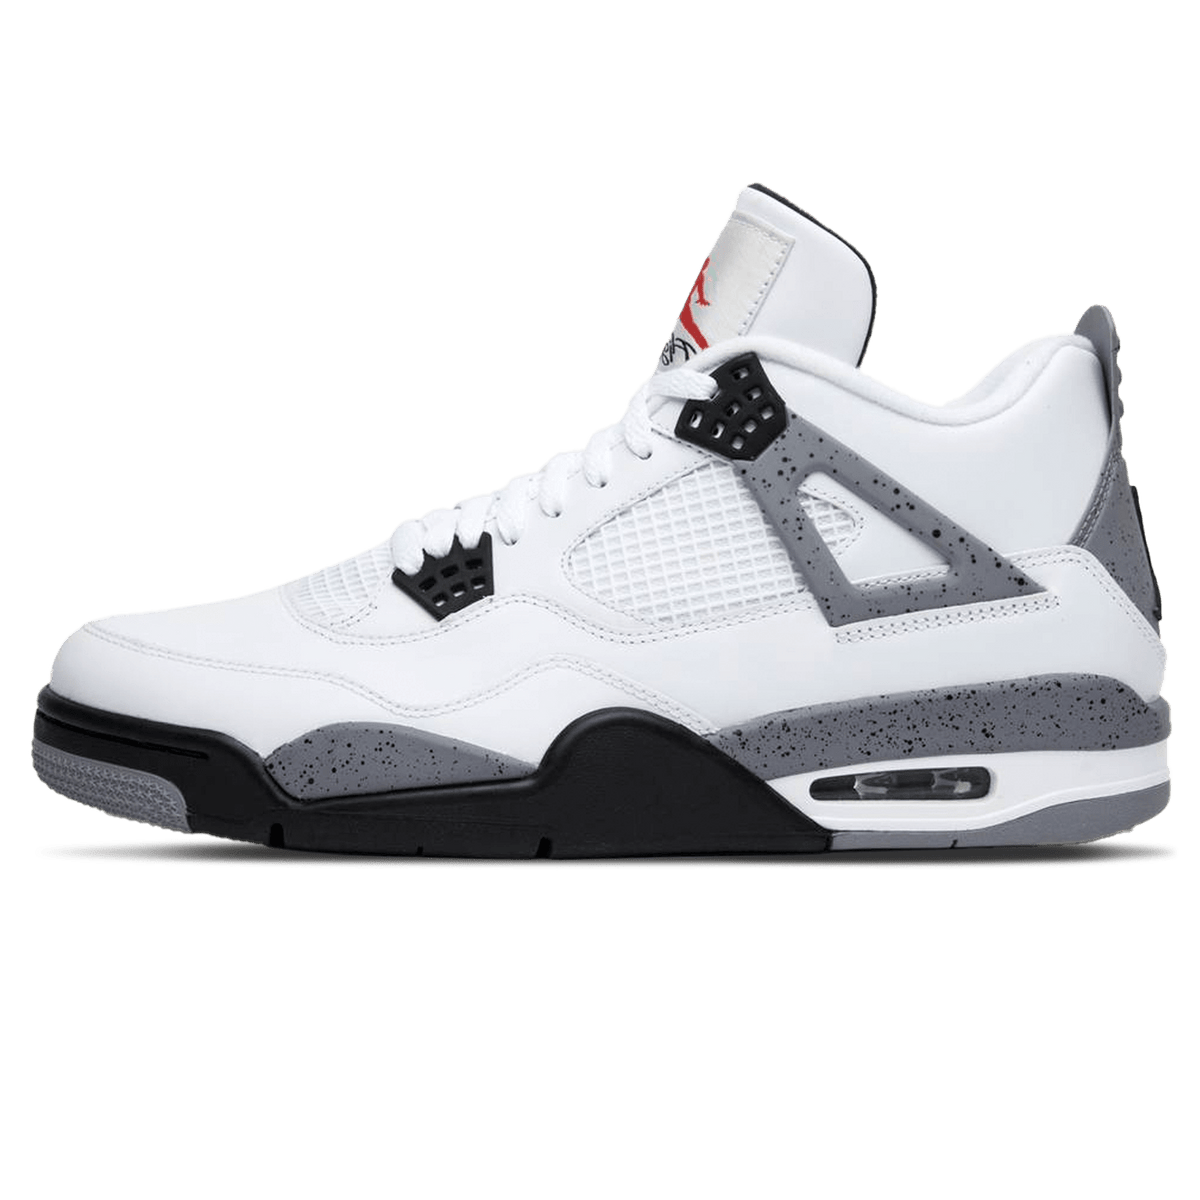 Air Jordan Michael 4 Retro 'Cement' 2012 - Kick Basketball